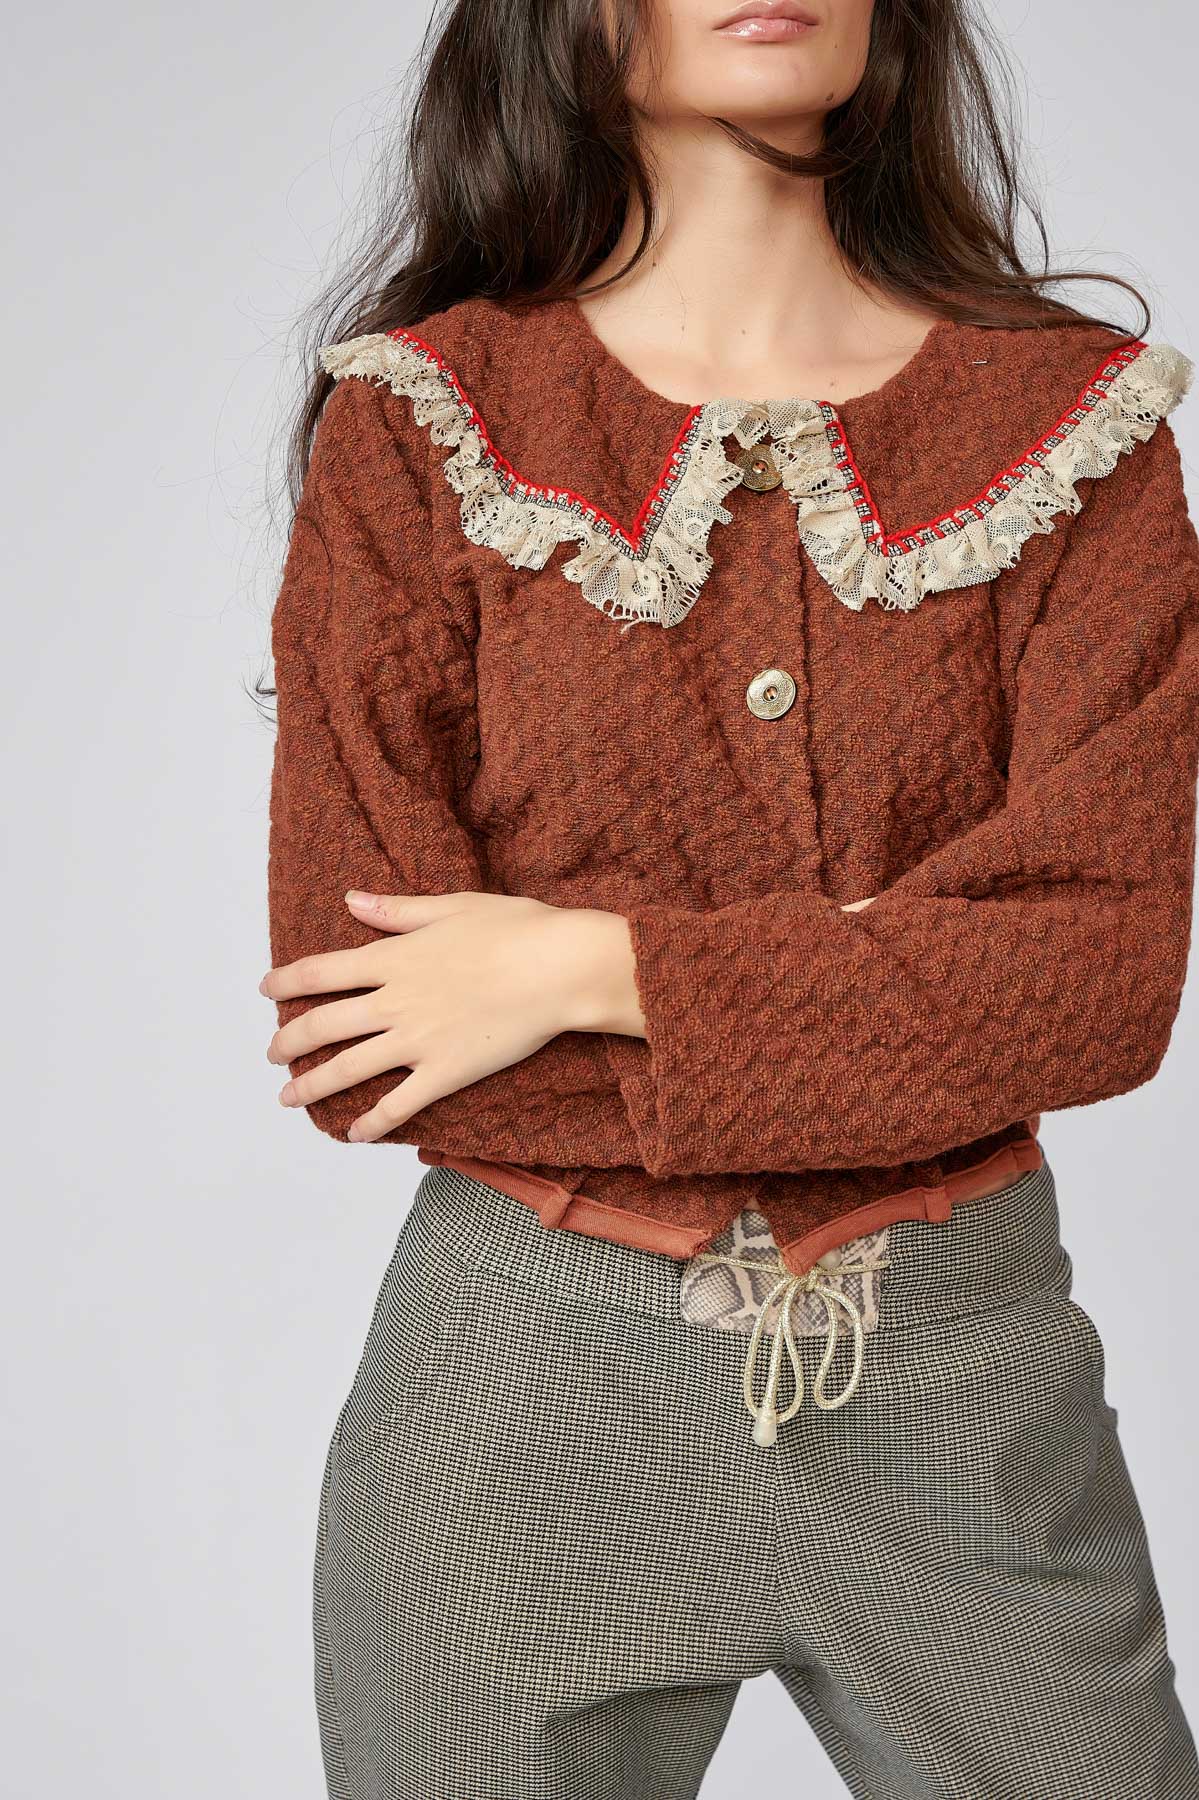 Juliana M Sweater. Natural fabrics, original design, handmade embroidery